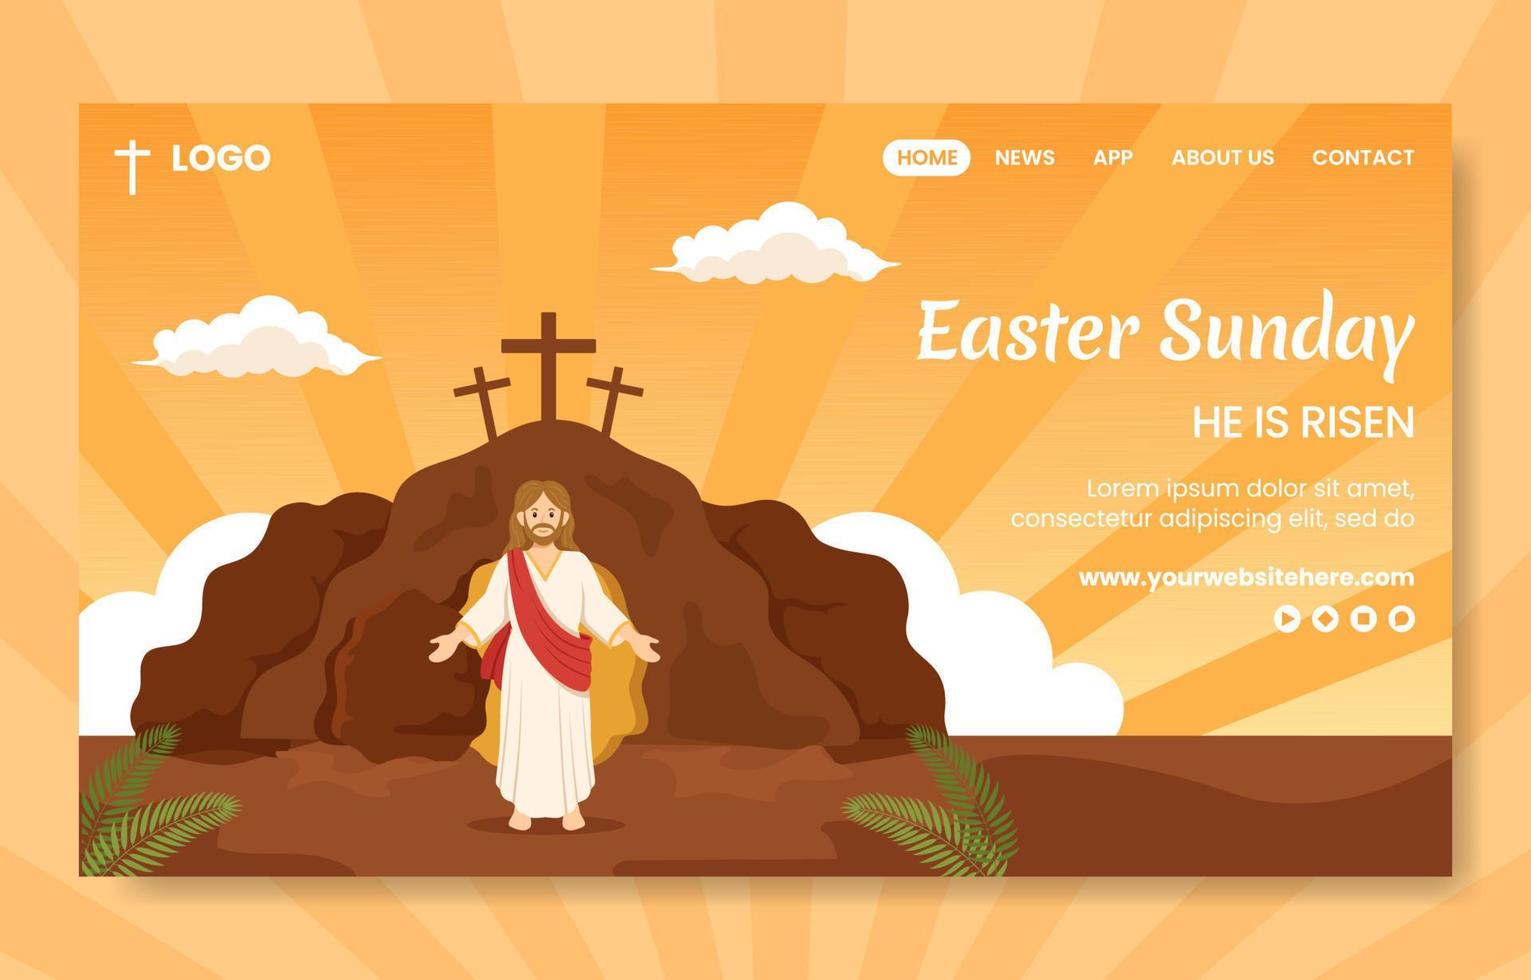 contento Pascua de Resurrección domingo día social medios de comunicación aterrizaje página mano dibujado modelo antecedentes ilustración vector